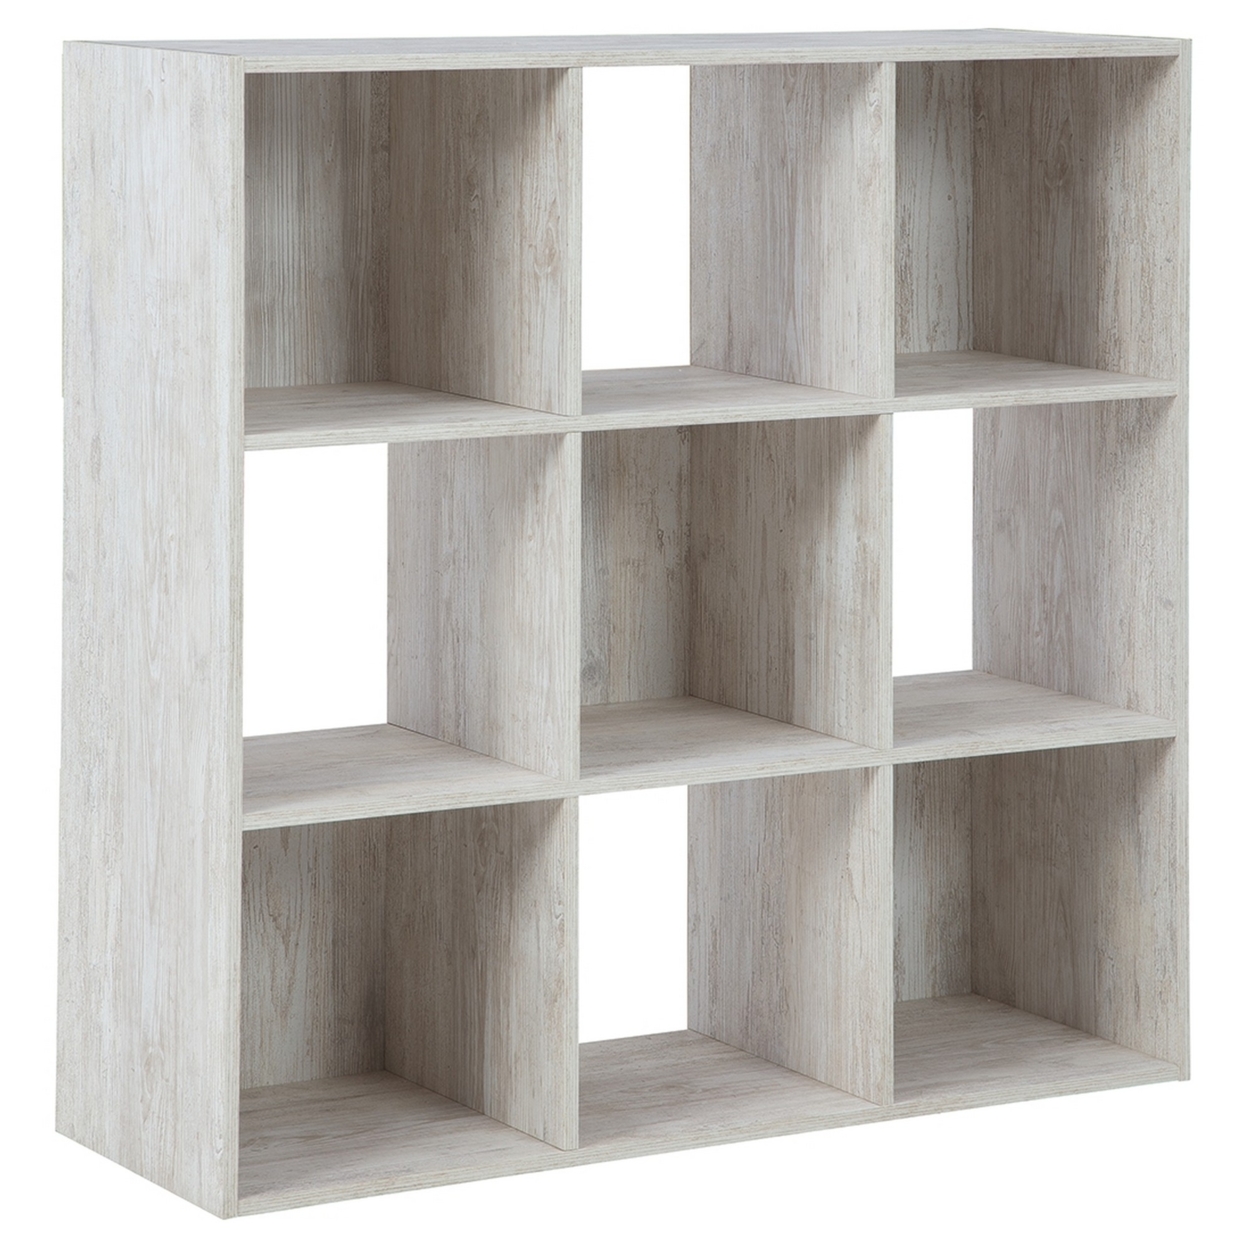 9 Cube Wooden Organizer With Grain Details, Washed White- Saltoro Sherpi